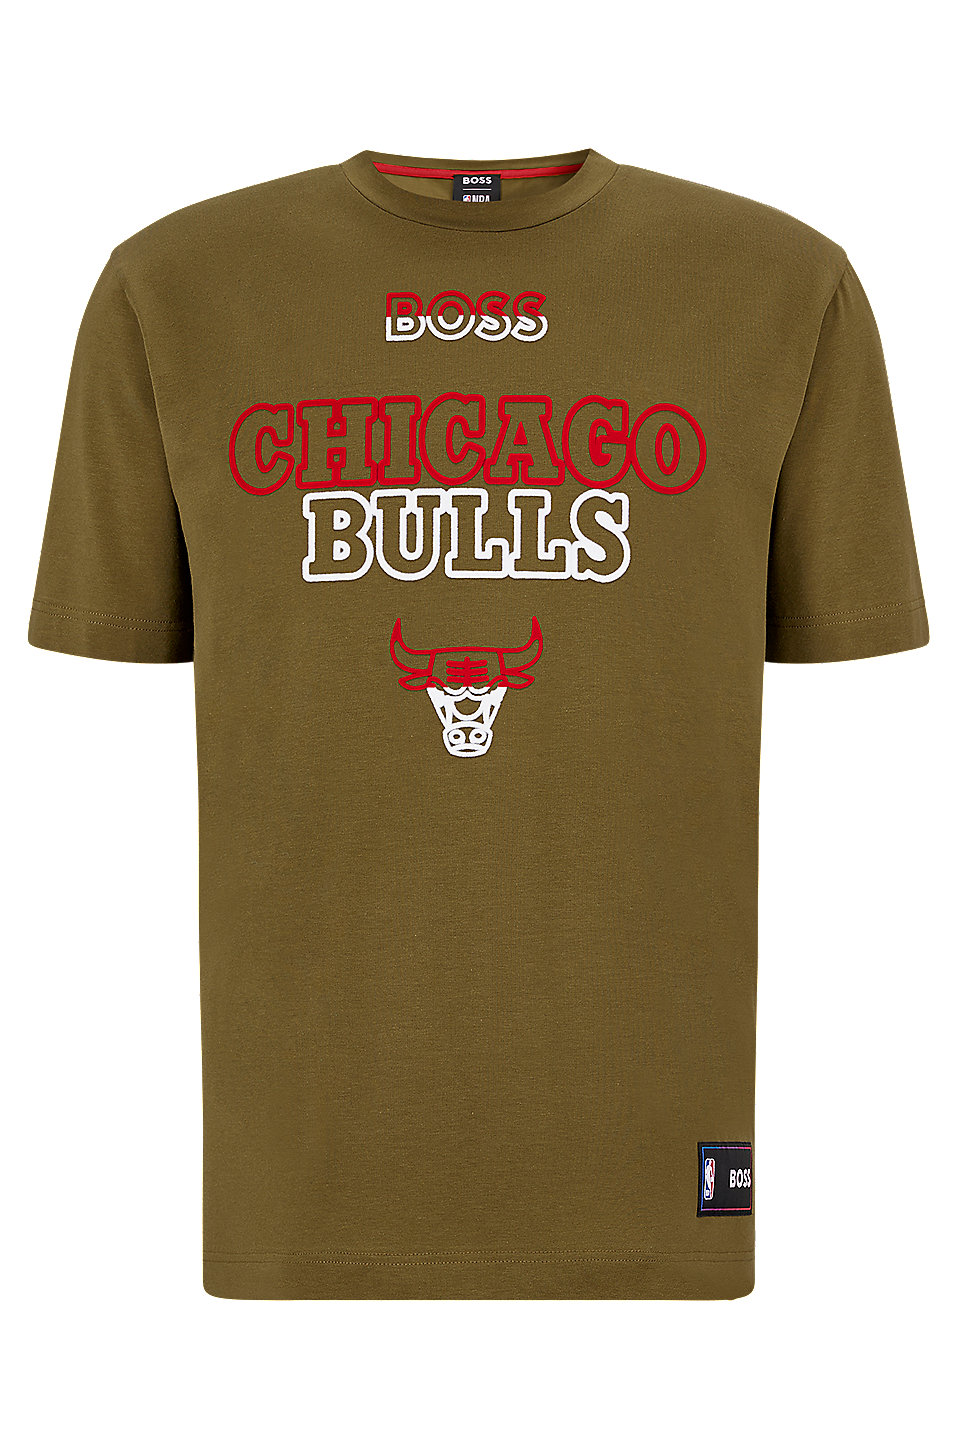 Chicago Bulls Nike Air Traffic Control Logo T-Shirt - Mens